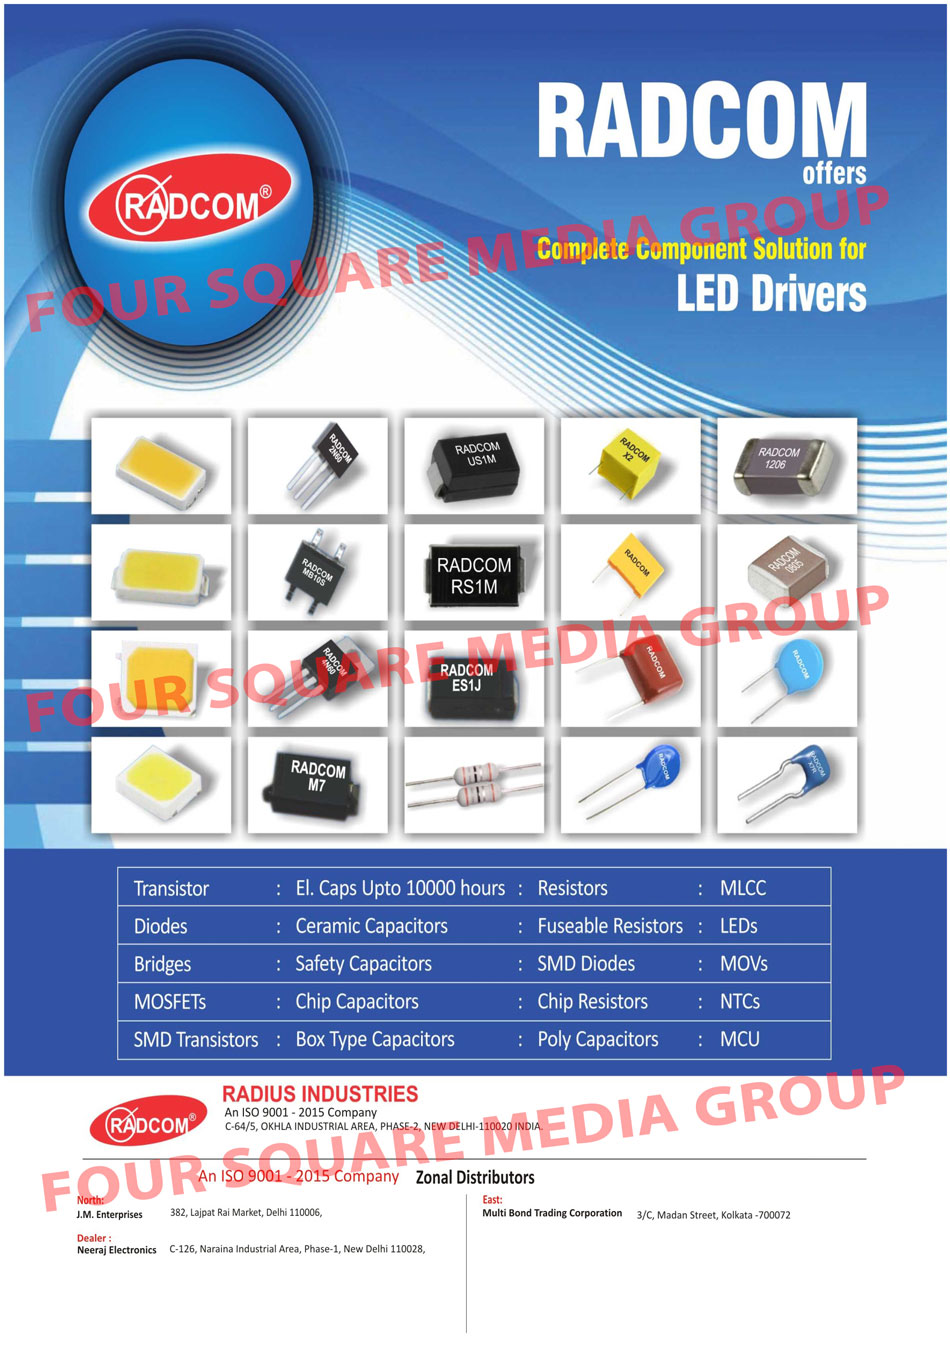 Led Drivers Components, Electronic Components, Capacitors, Diodes, LEDs, Transistors, Rectifiers, Bridges, Schottky, DIACS, Resistors, MOV, NTCs, Integrated Circuits, MOSFETs, SMD Transistors, Ceramic Capacitors, Safety Capacitors, Chip Capacitors, Box Type Capacitors, Fuseable Resistors, SMD Diodes, Chip Resistors, Poly Capacitors, MLCC, MCU, Electrolytic Capacitors, Public Address System Component Solutions, Power Transistors, Low Noise Audio Amplifier Transistors, Output Transistors, Integrated Circuits, Passive Components, Mobile Charger Components